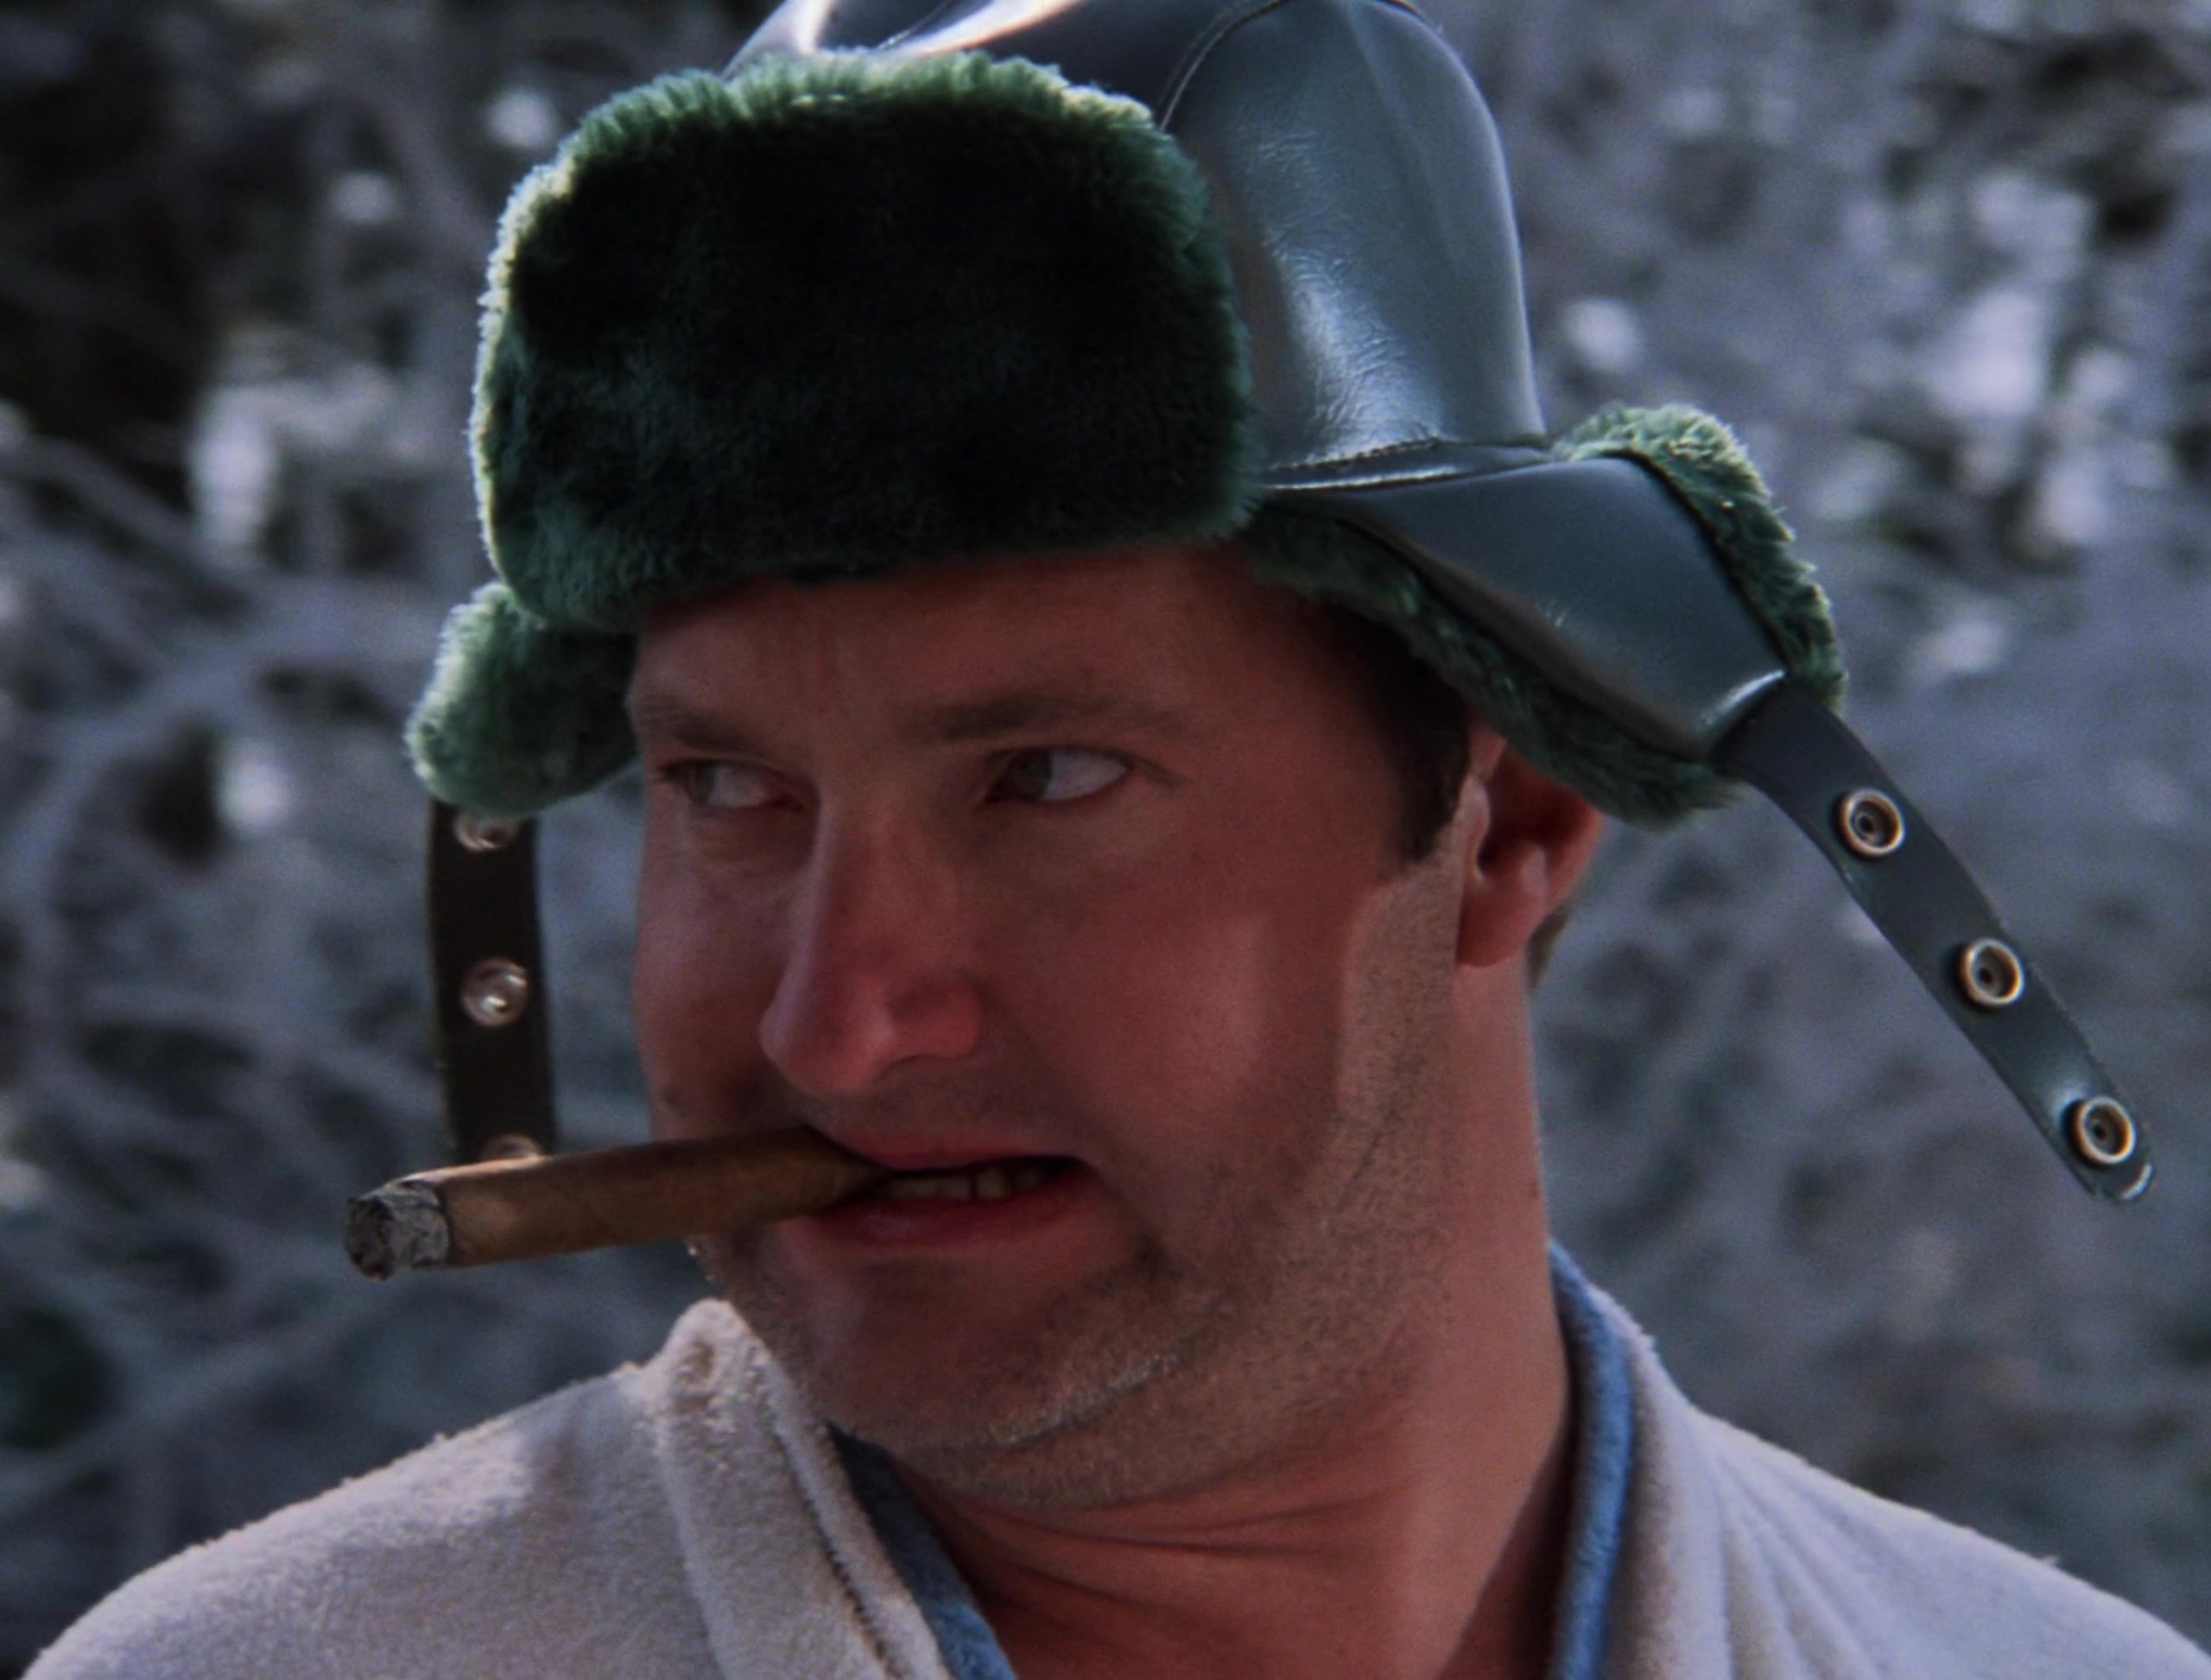 Worn on National Lampoon's Christmas Vacation (1989) Movie - Winter Ear Flap Hat Worn by Randy Quaid as Eddie Johnson